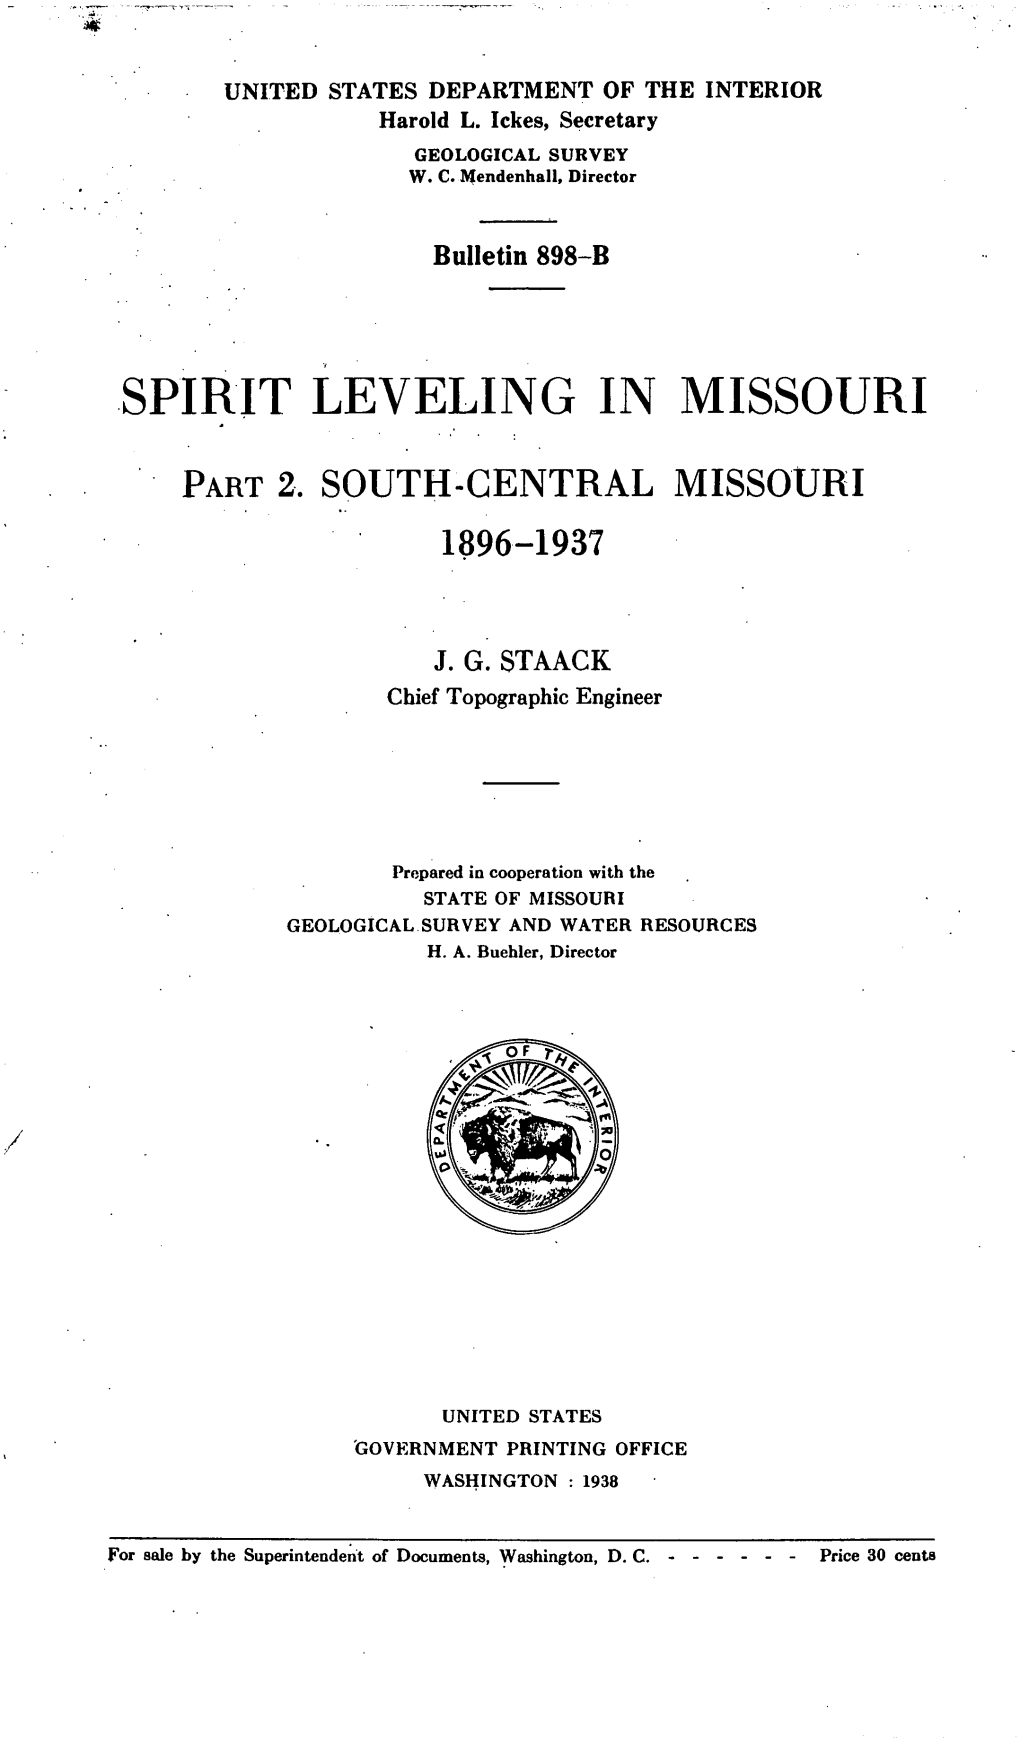 Spirit Leveling in Missouri Part 2